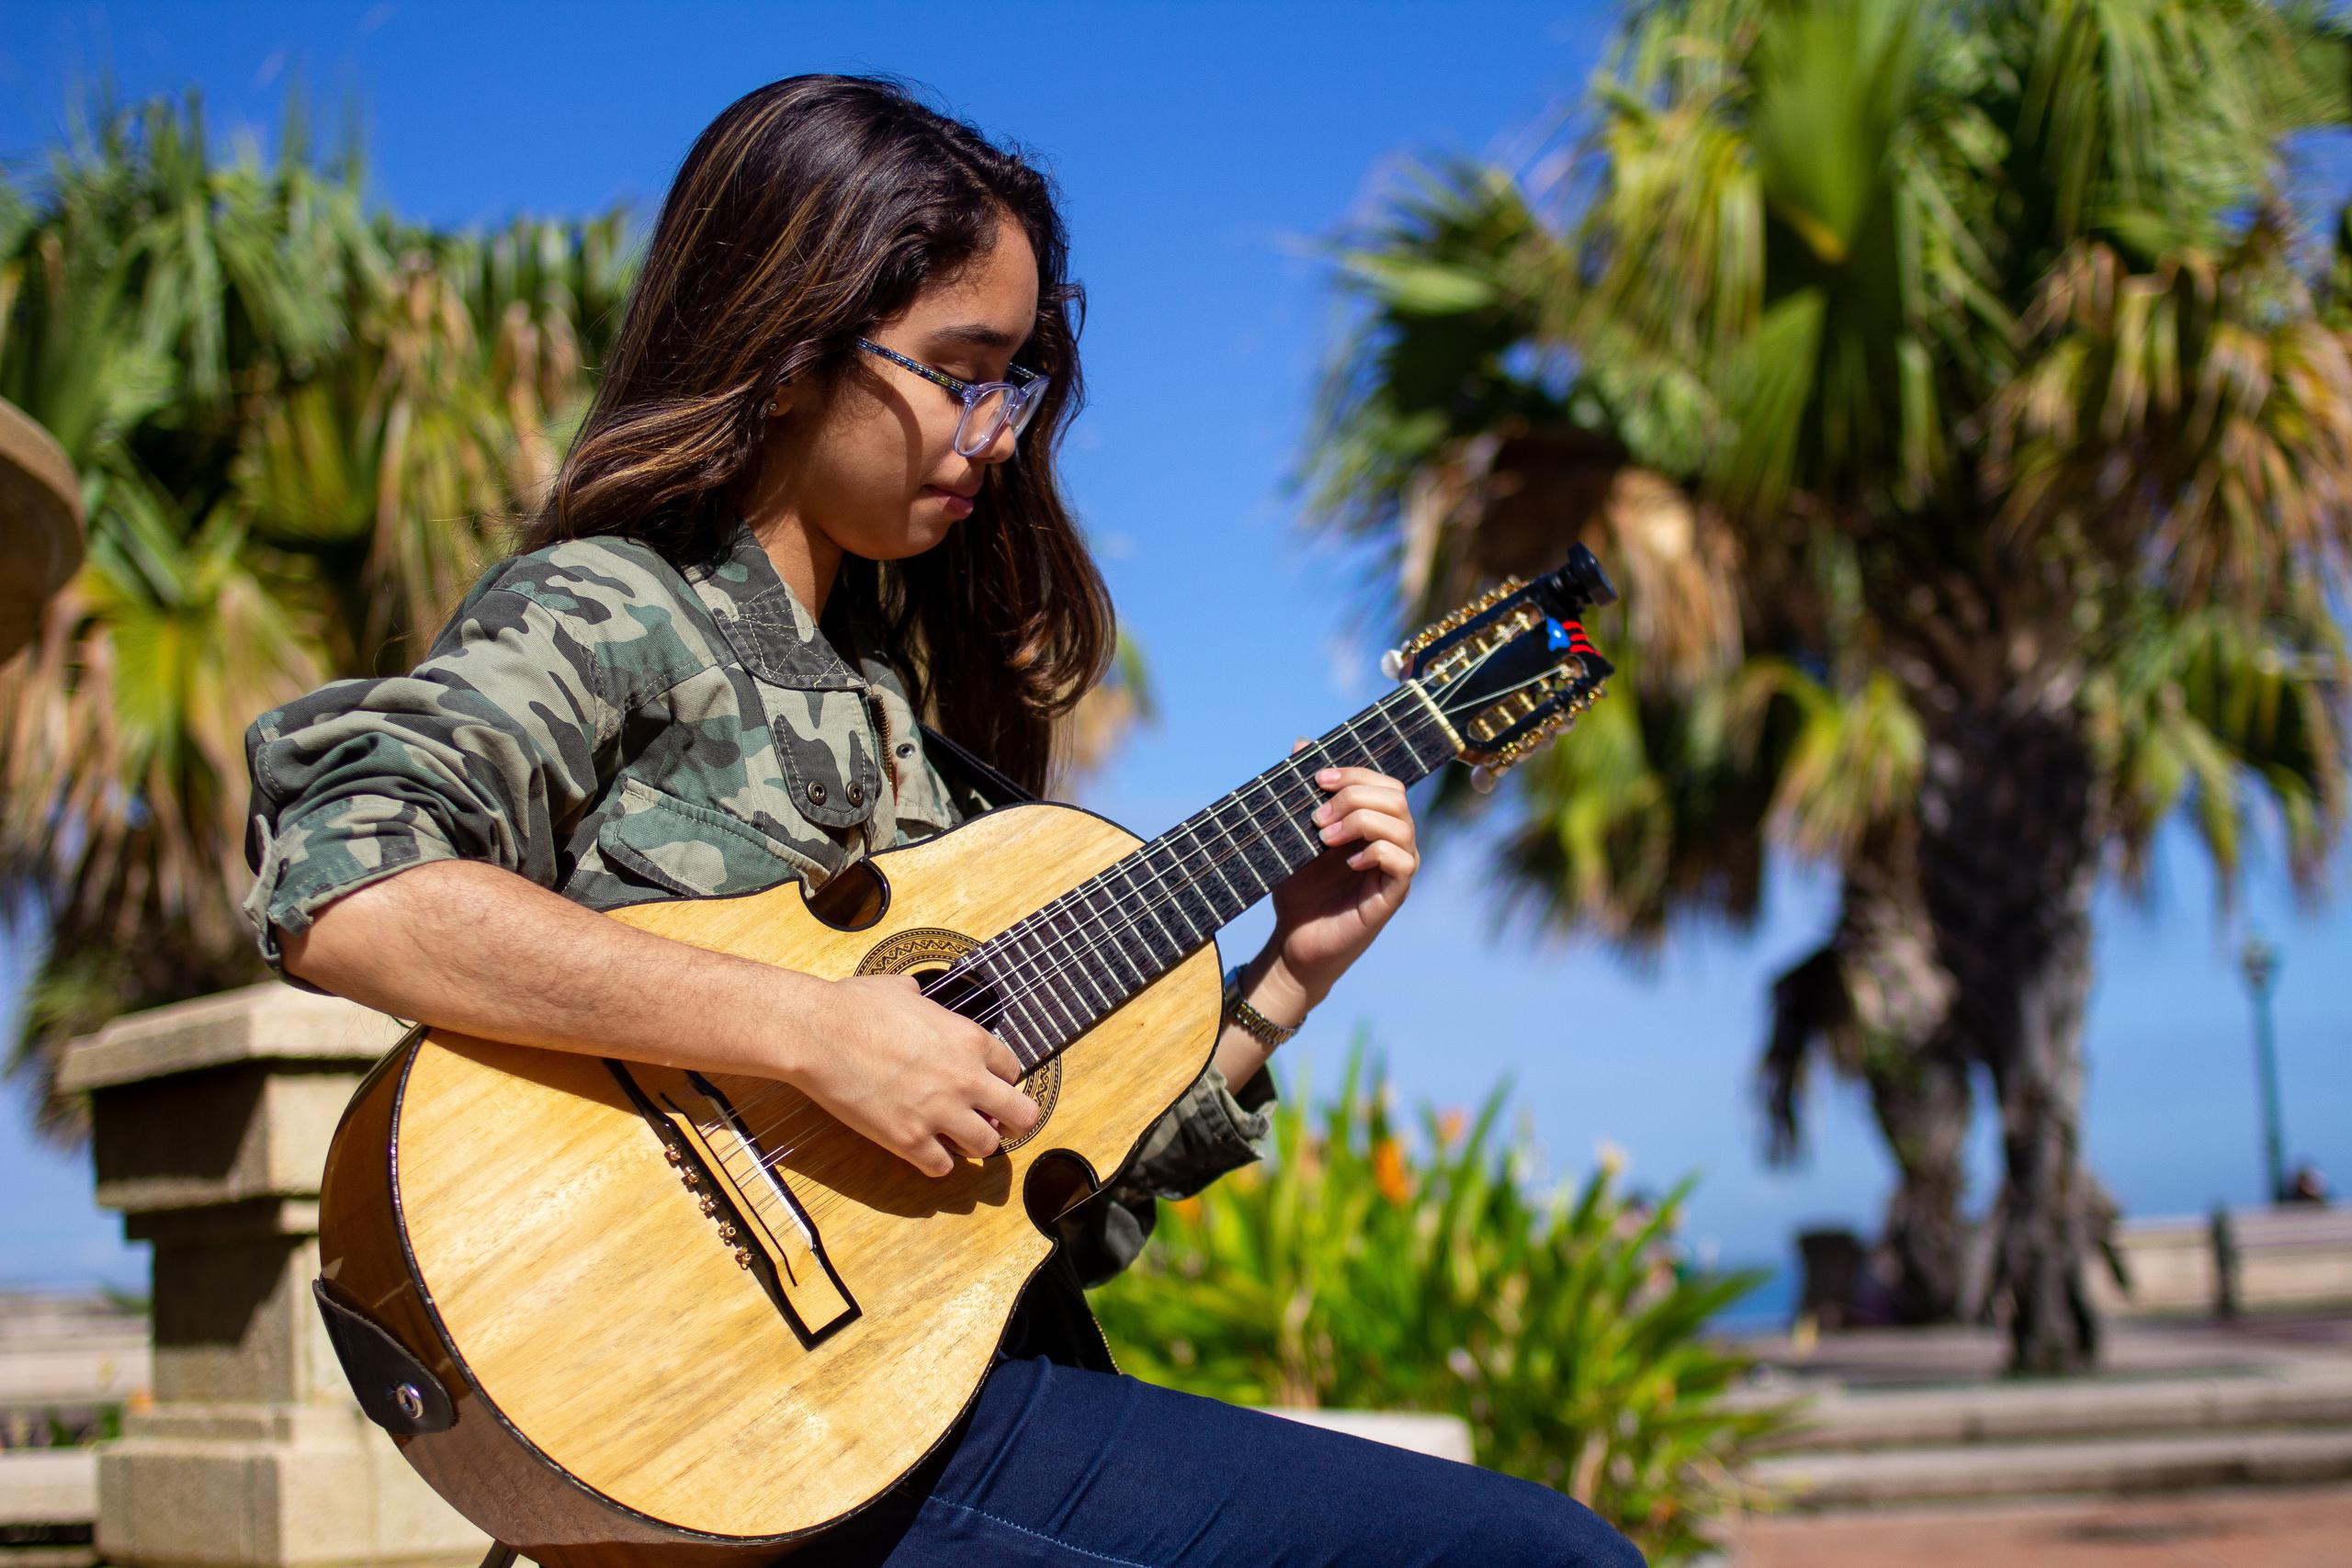 La joven de Tras Talleres aspira a convertirse en educadora de la música.